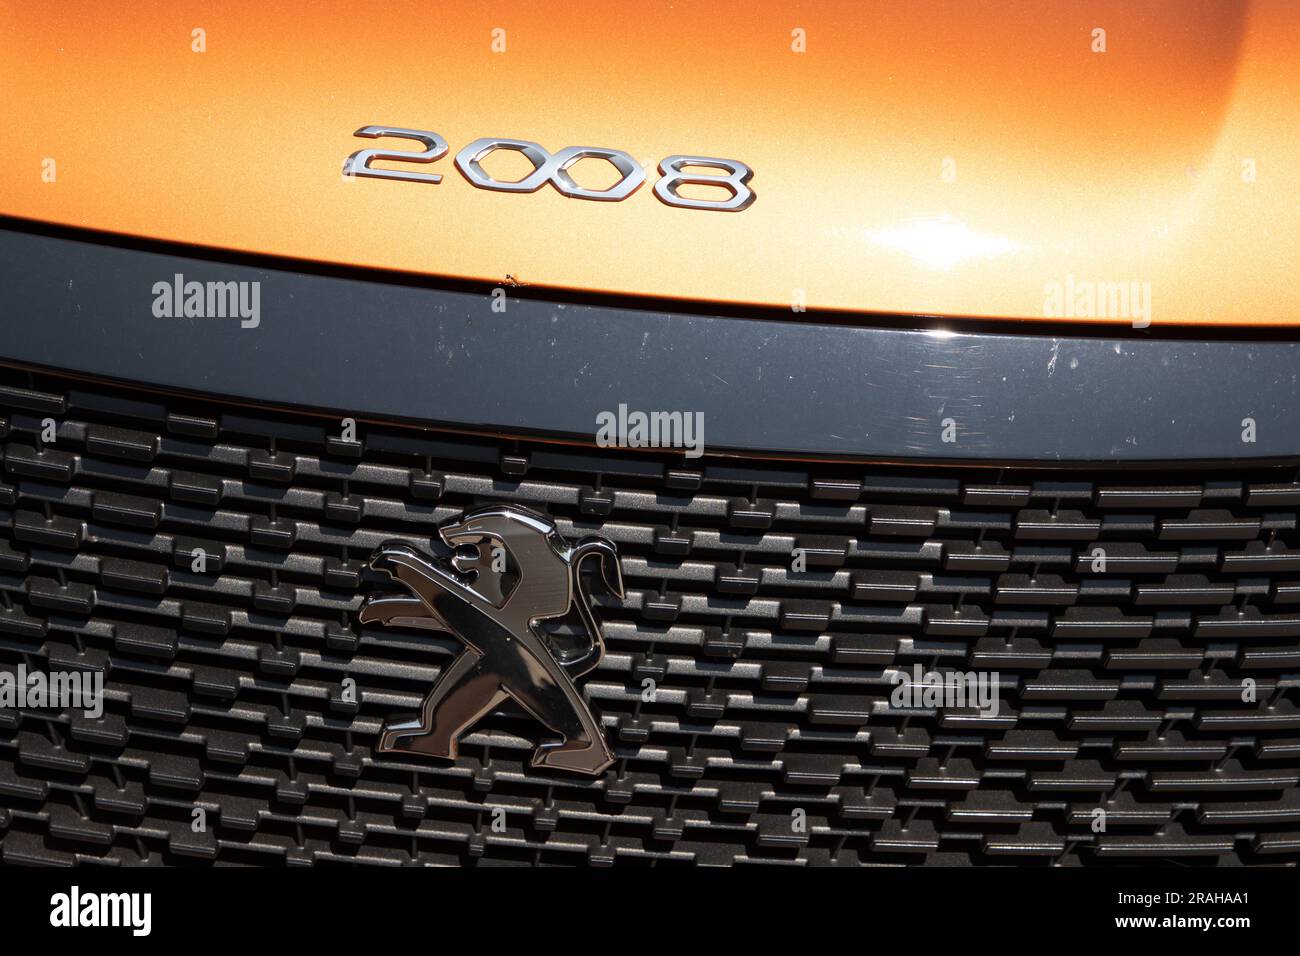 Das neue Peugeot-Logo Emblem 208 Auto Exterior 2022 2023 2024 Auto